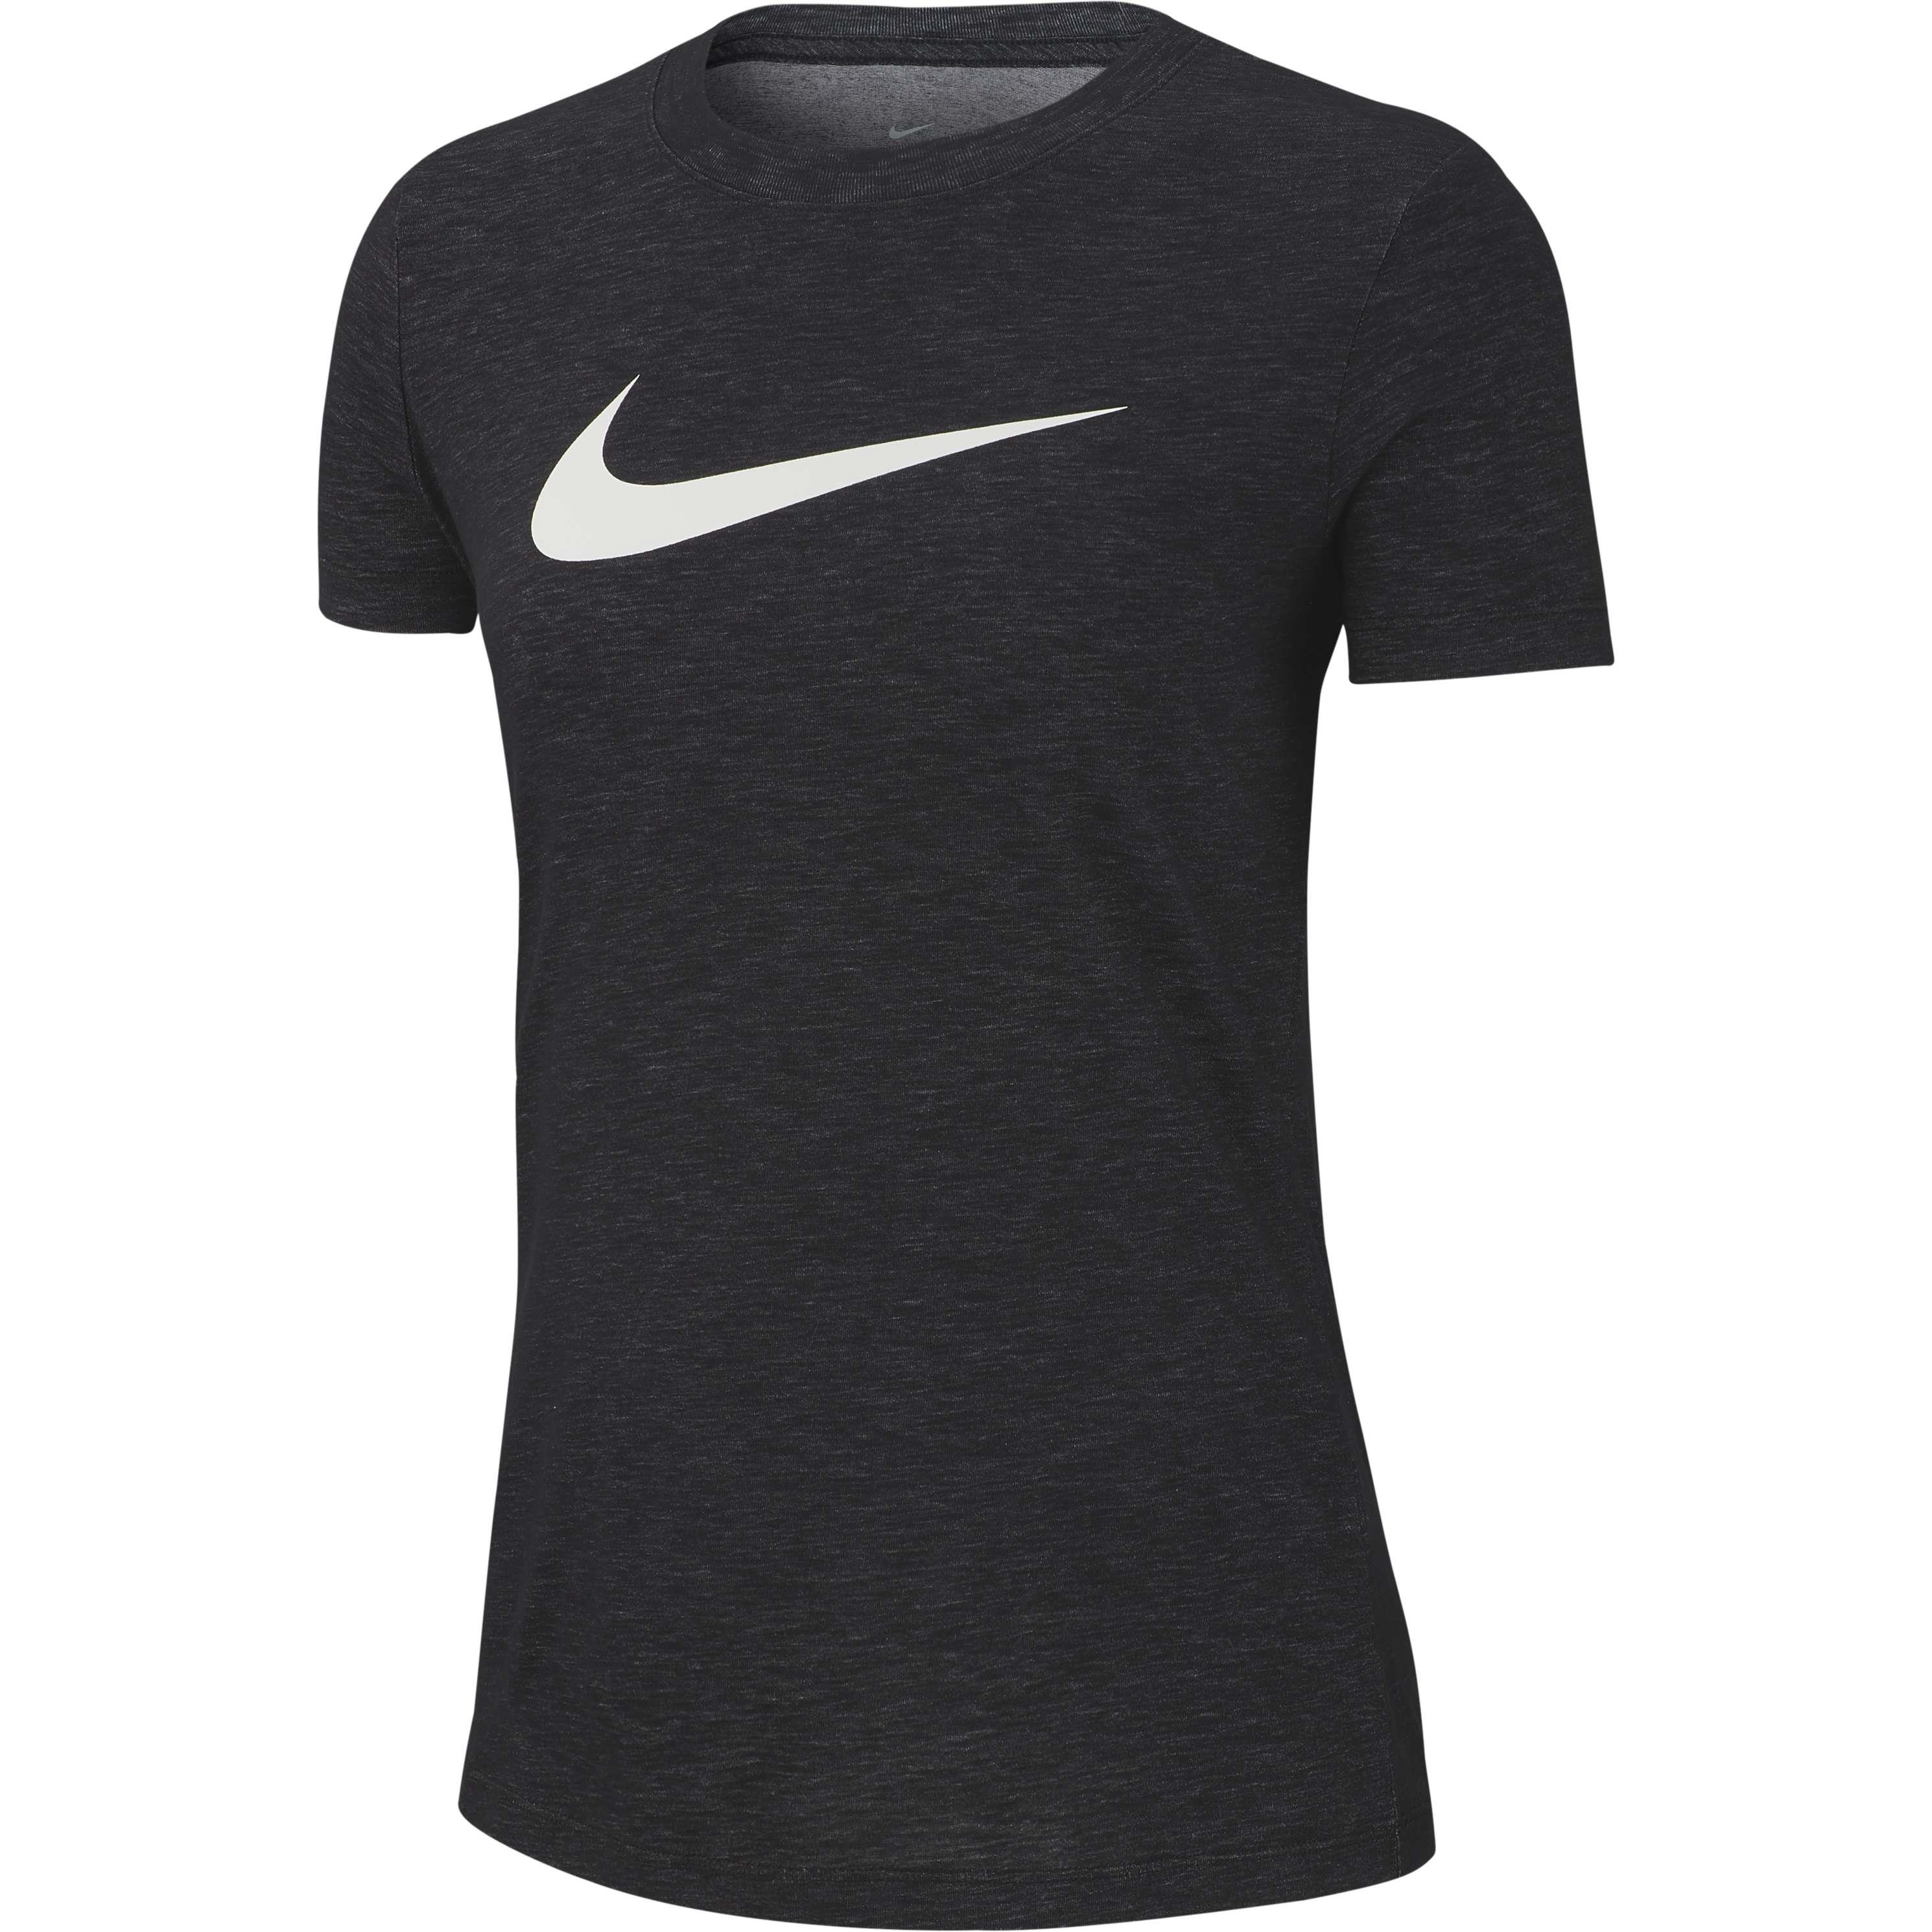 Afrikaanse Omtrek wees stil Nike Dri-FIT shirt dames black heather grey white